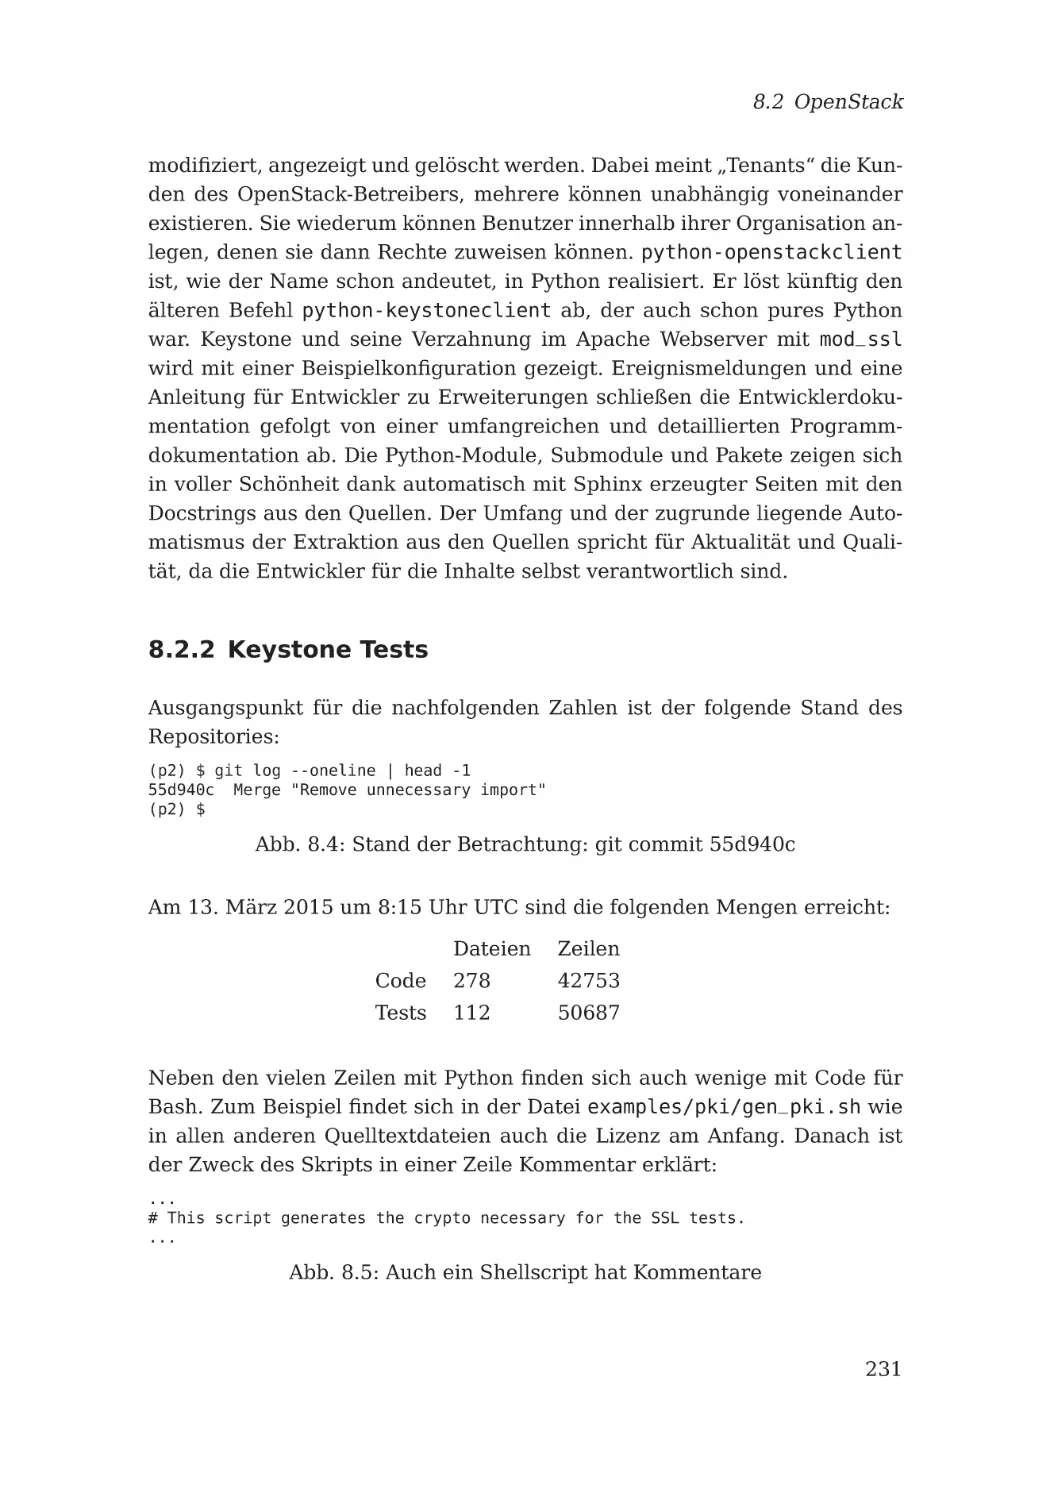 8.2.2 Keystone Tests